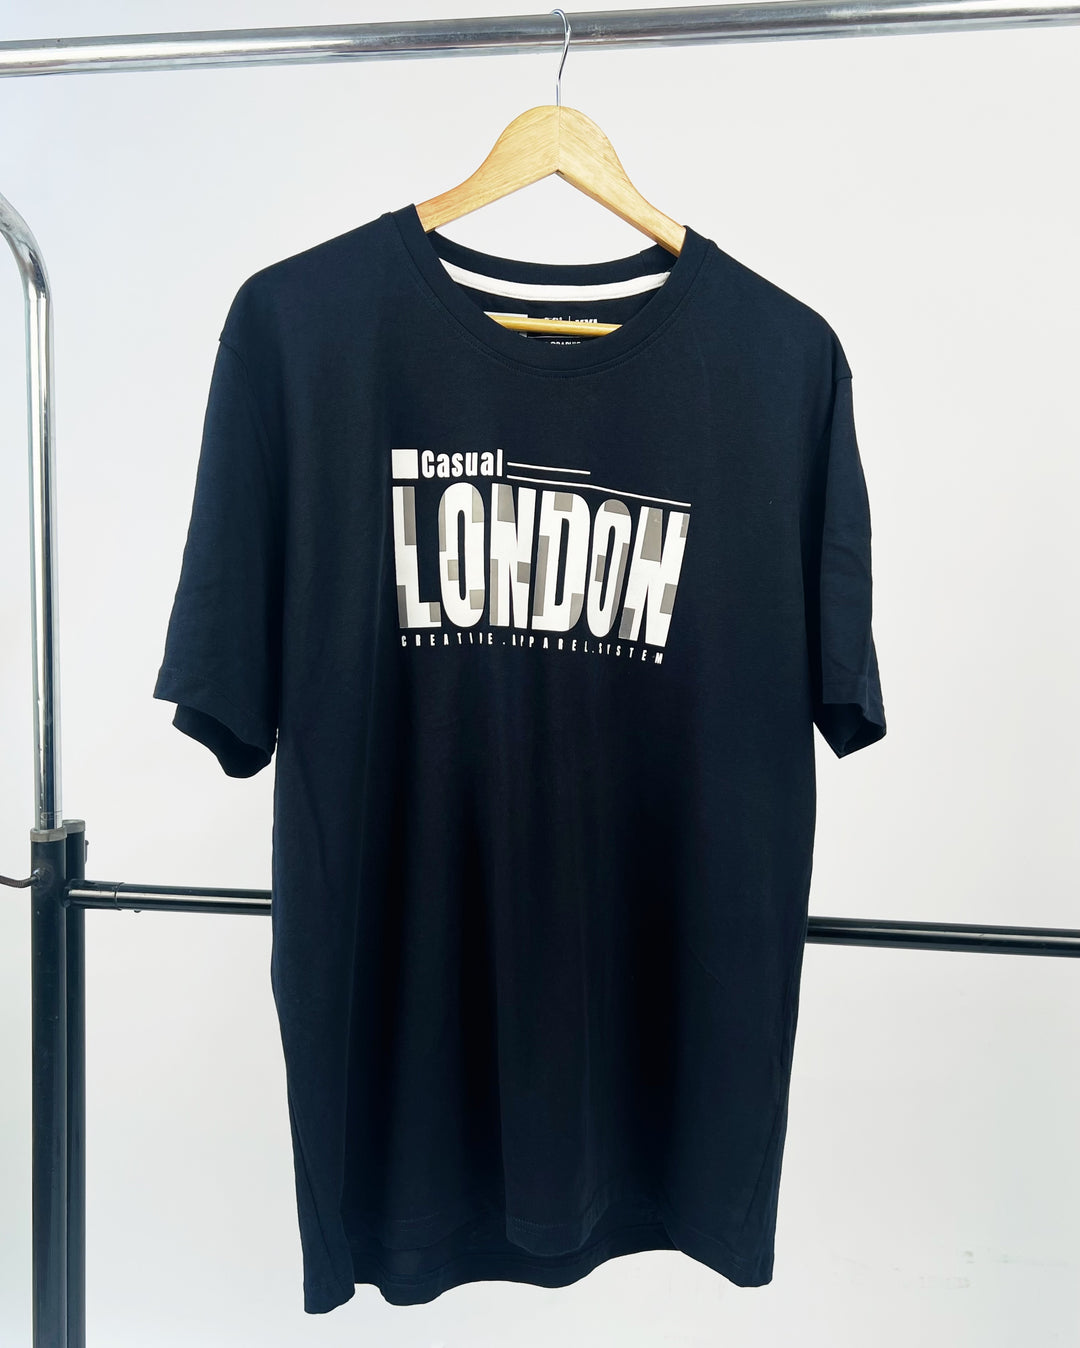 N Man Casual London T-shirt in Navy